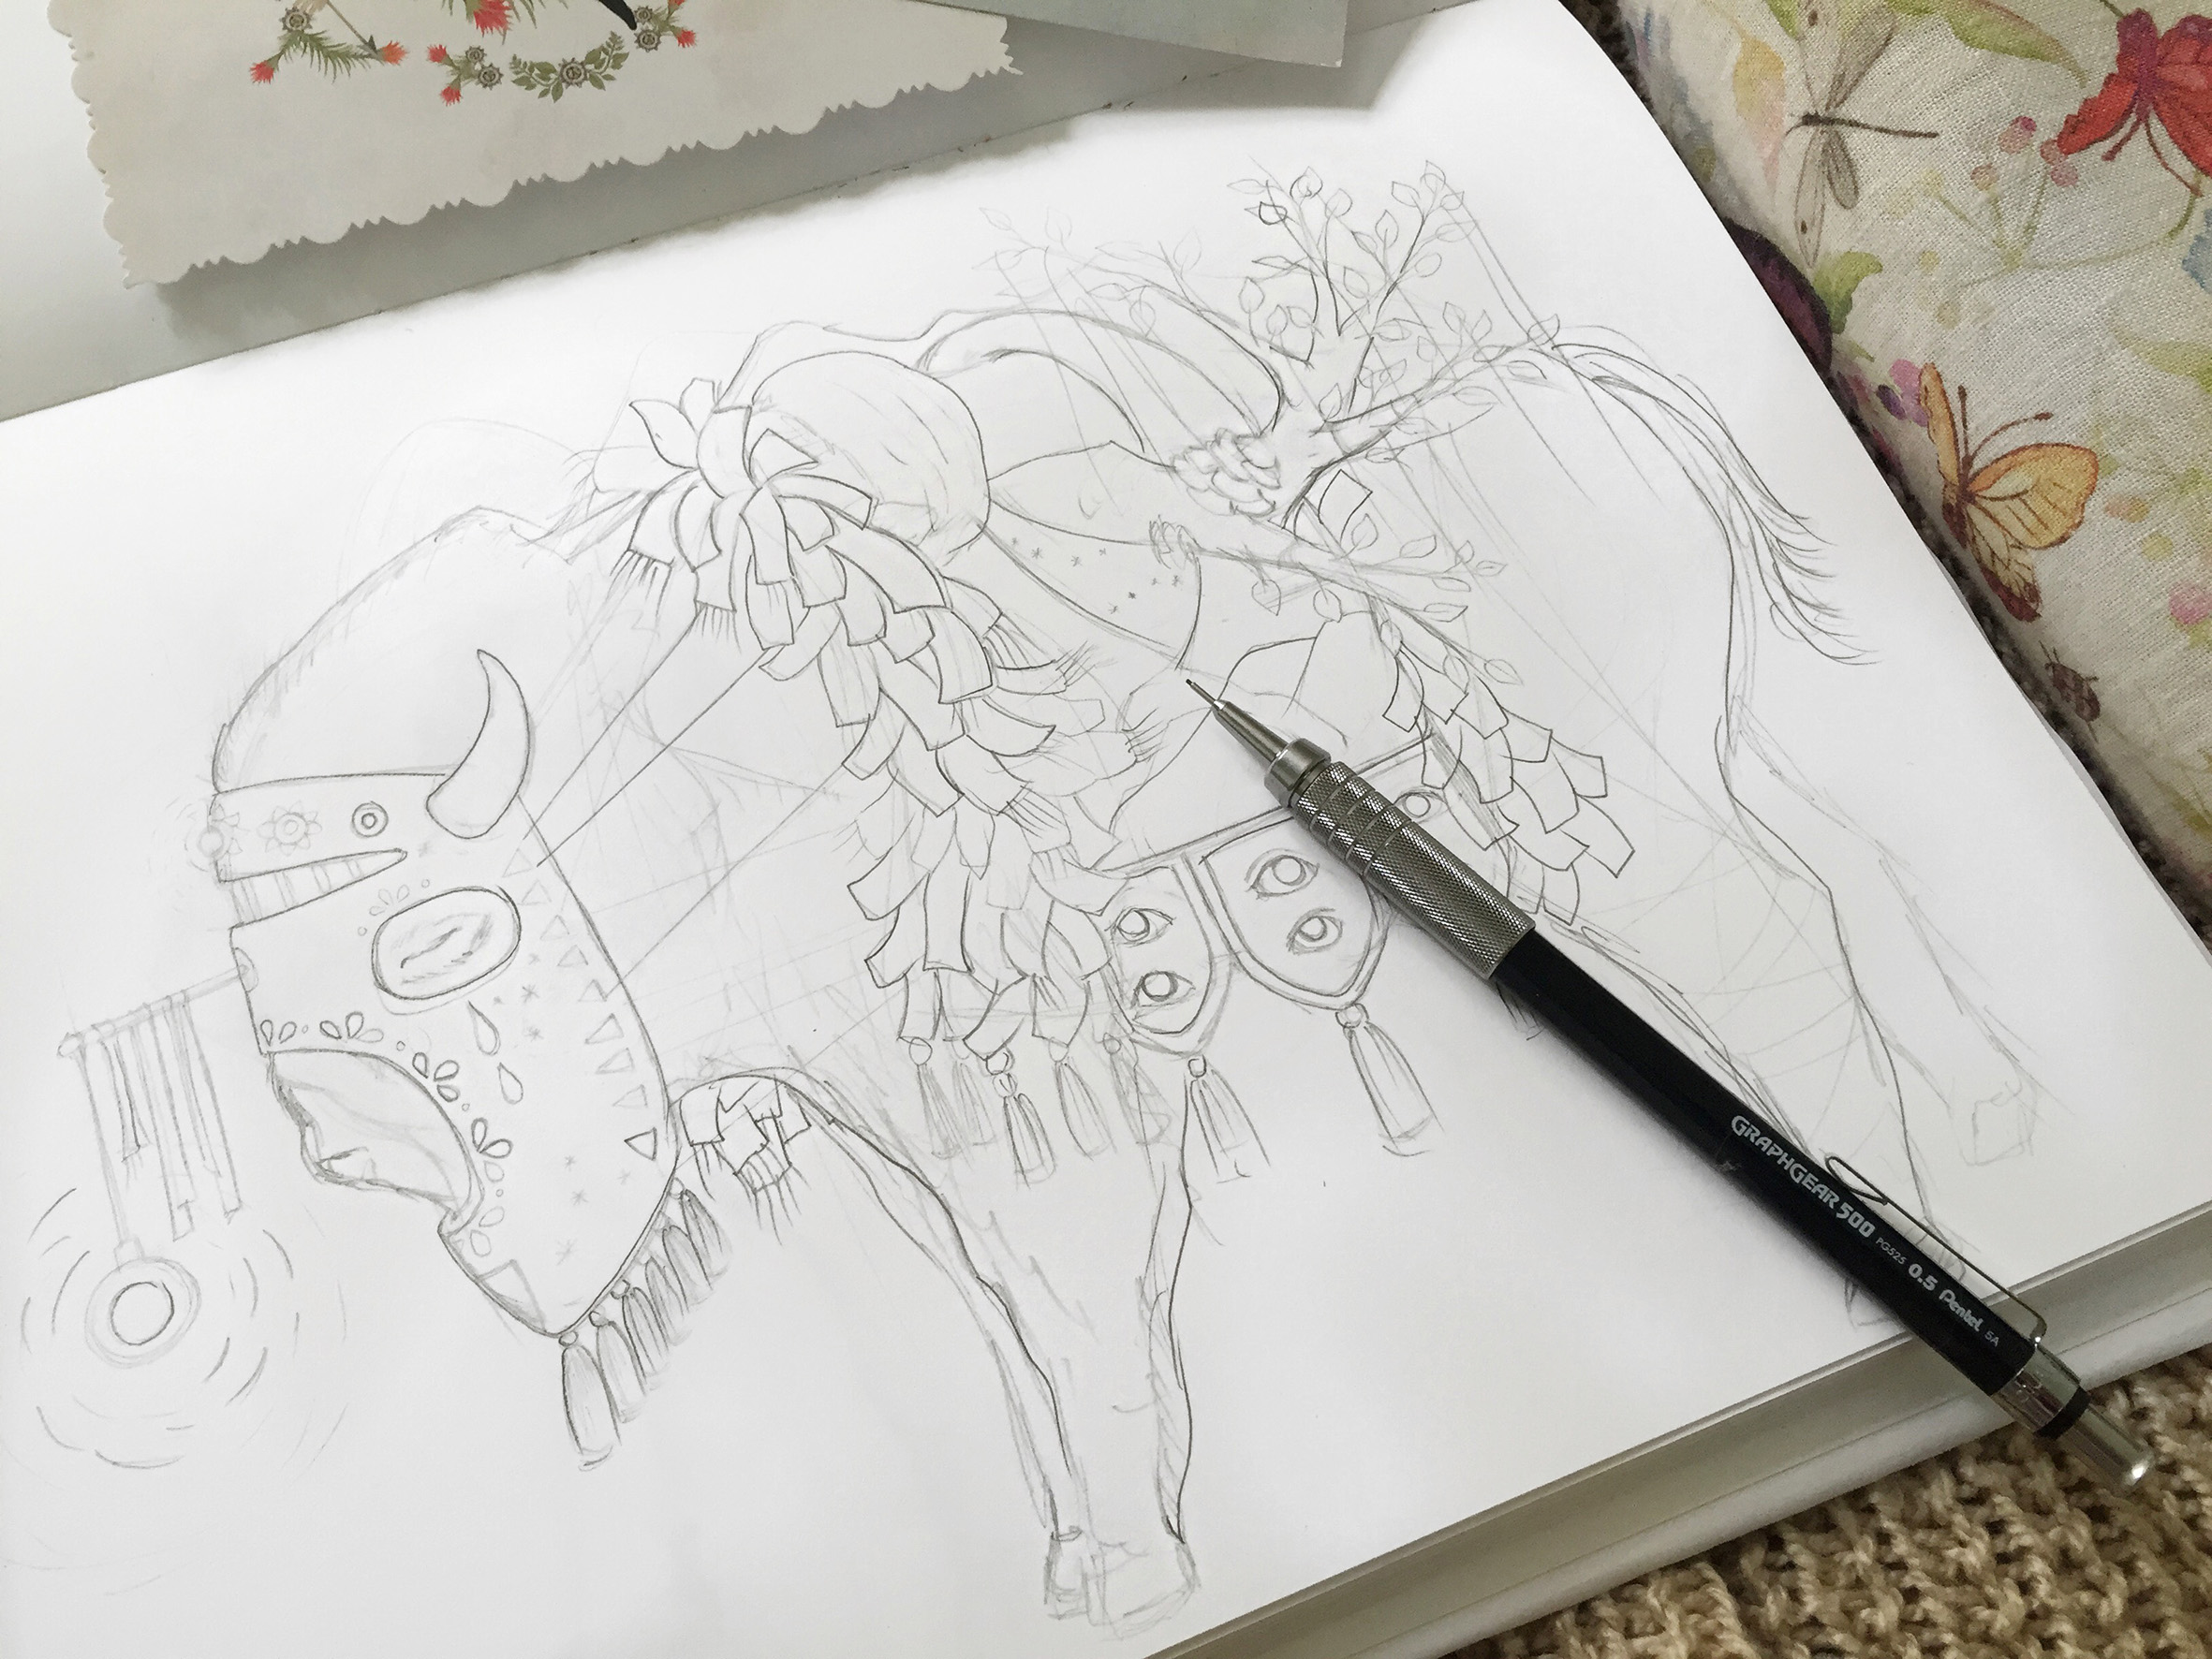  Abyssal beast sketch. In progress illustration 